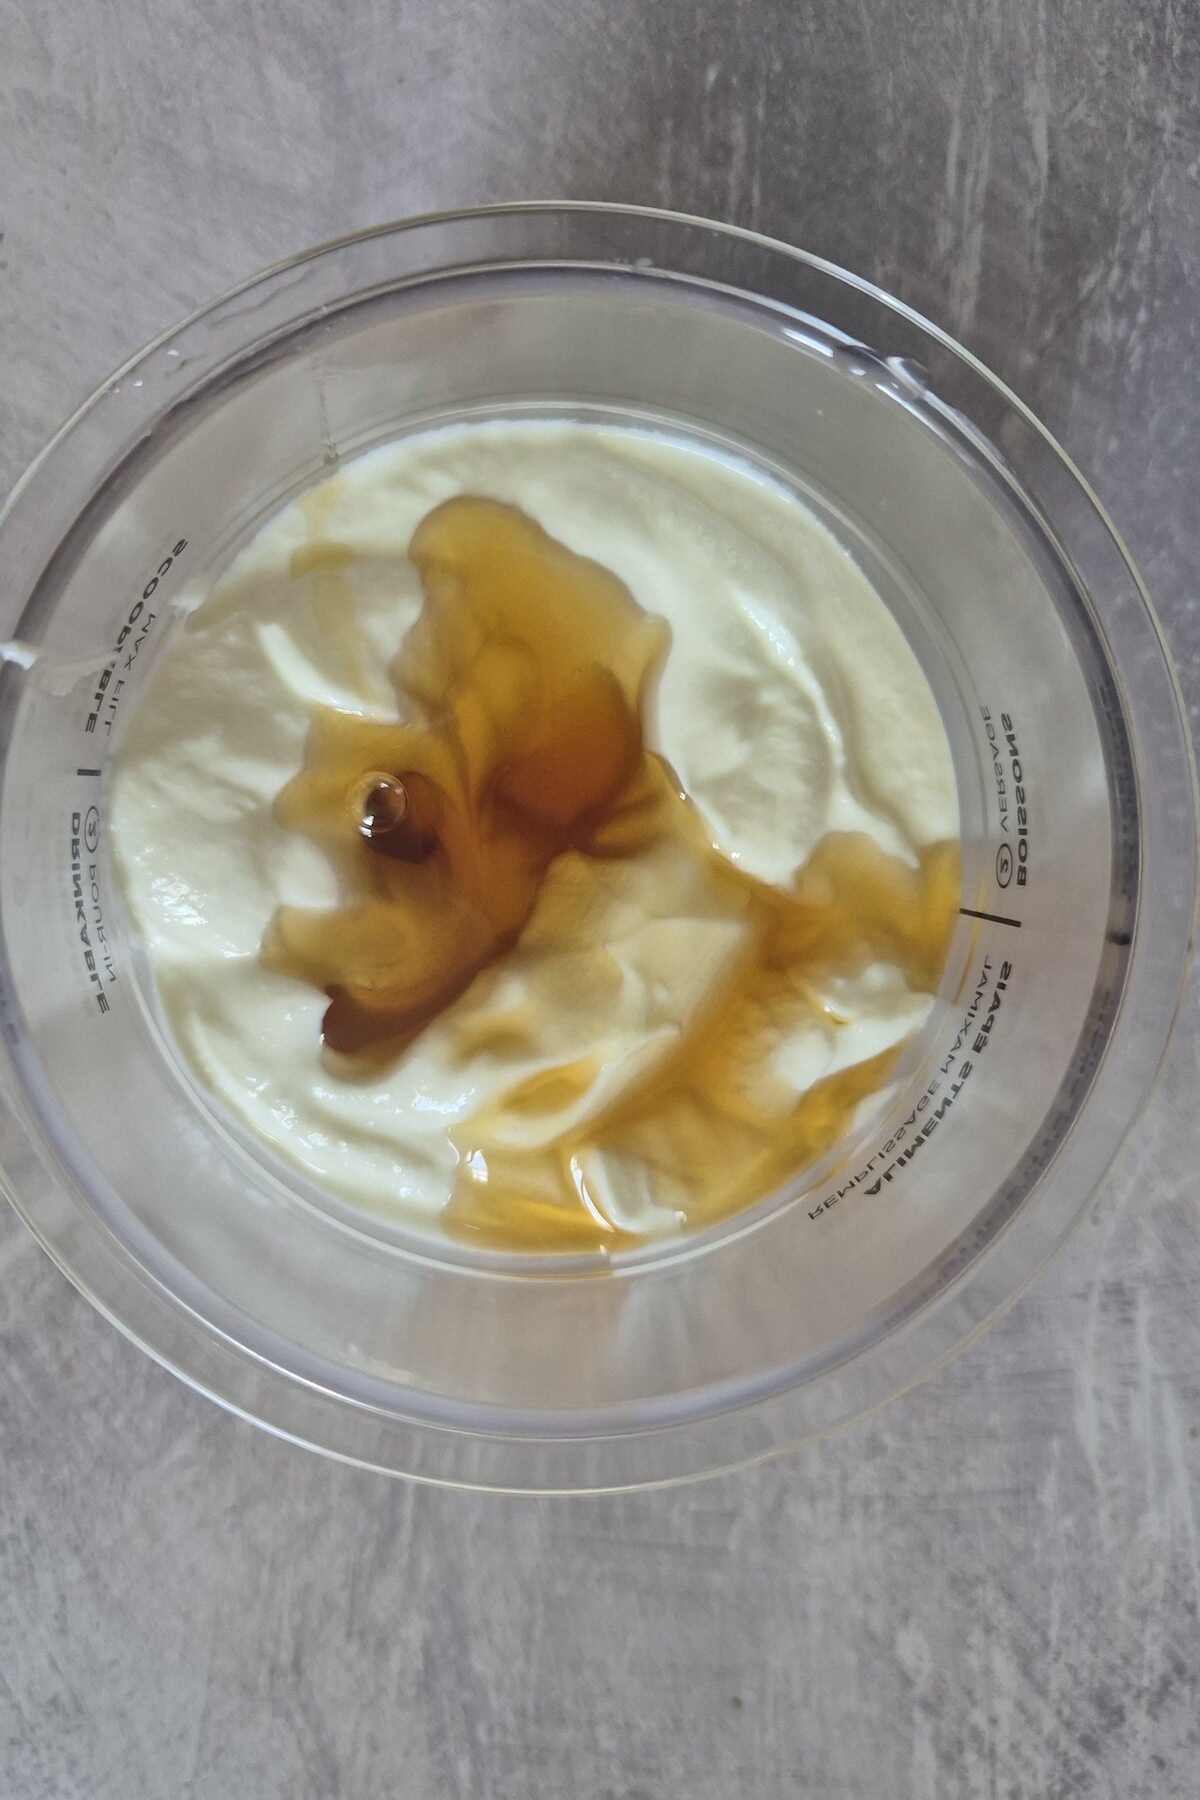 the ingredients for frozen yogurt inside the Ninja Creami pint container.